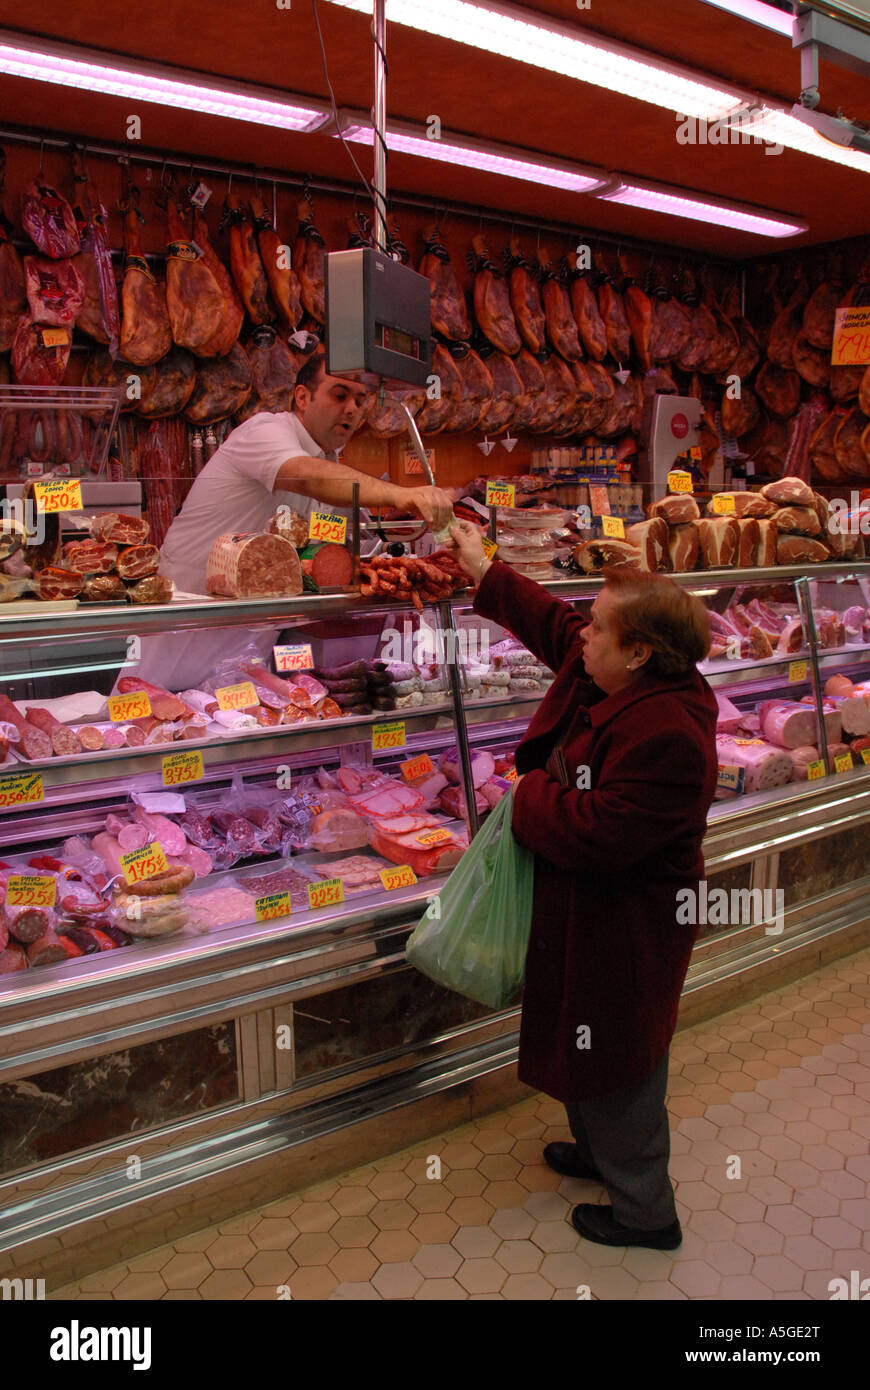 A food market scene inside the Mercado Central  food market, Valencia, Spain Stock Photo